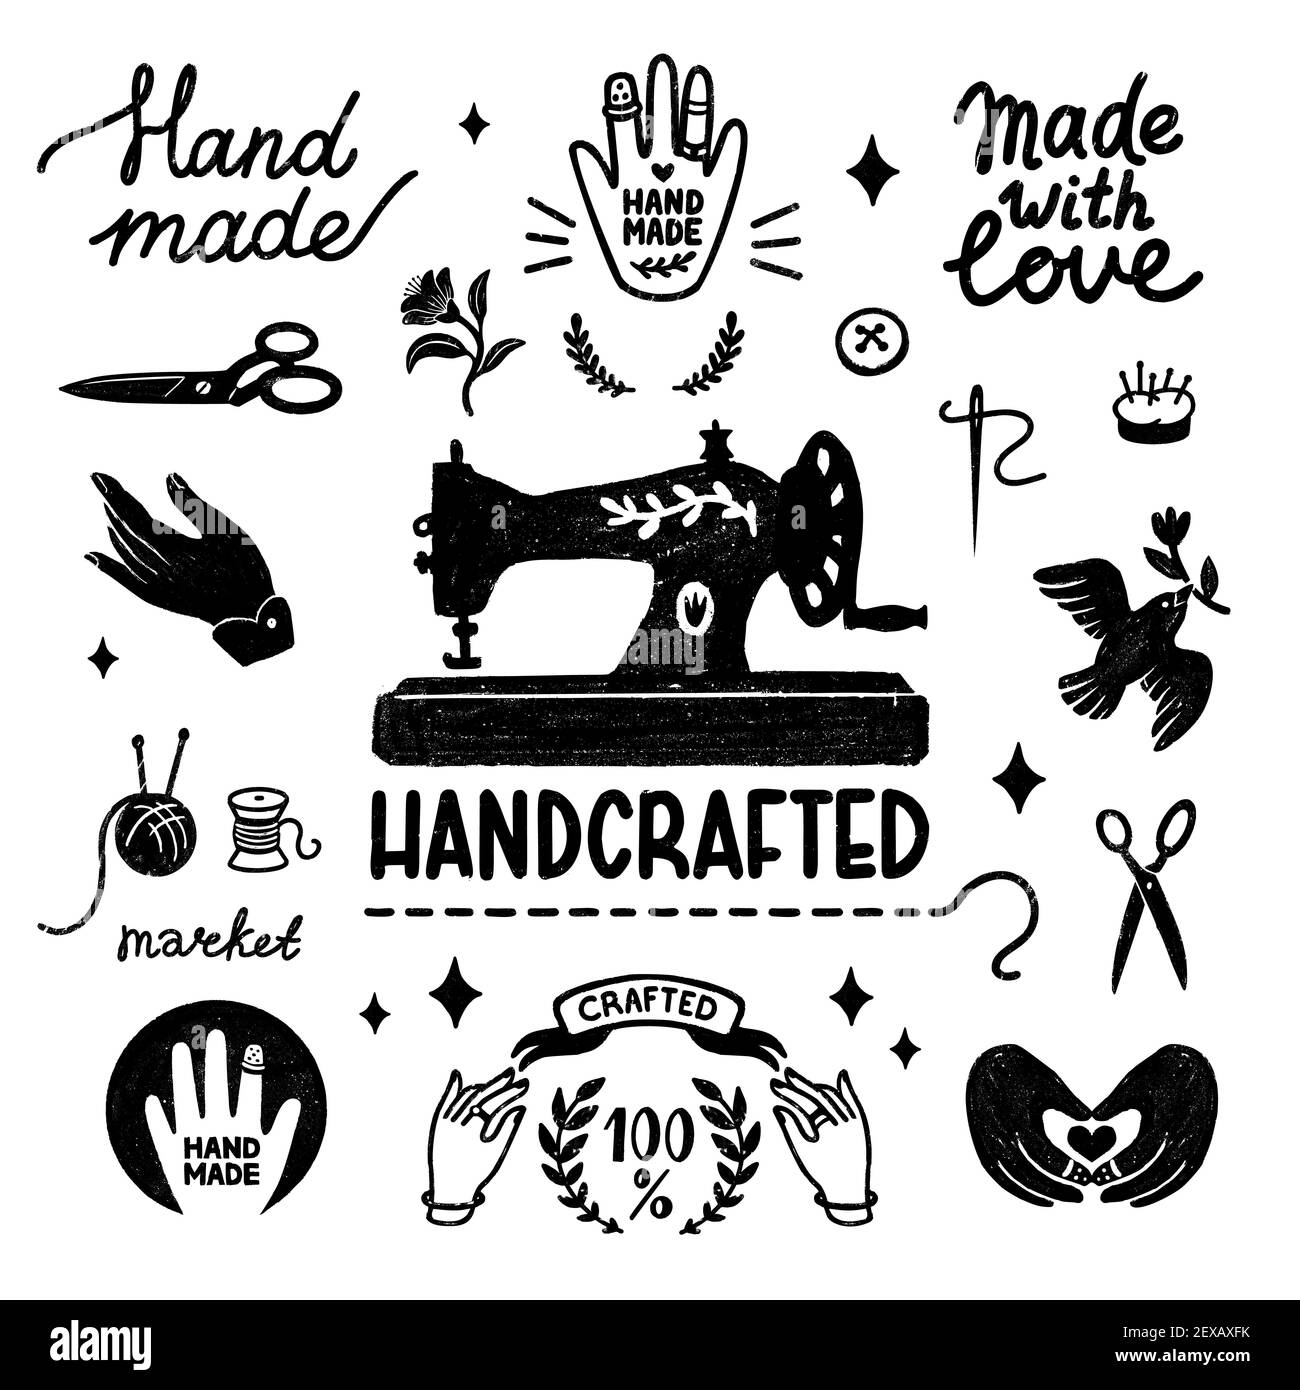 Handmade hand made craft label typography Vector Image